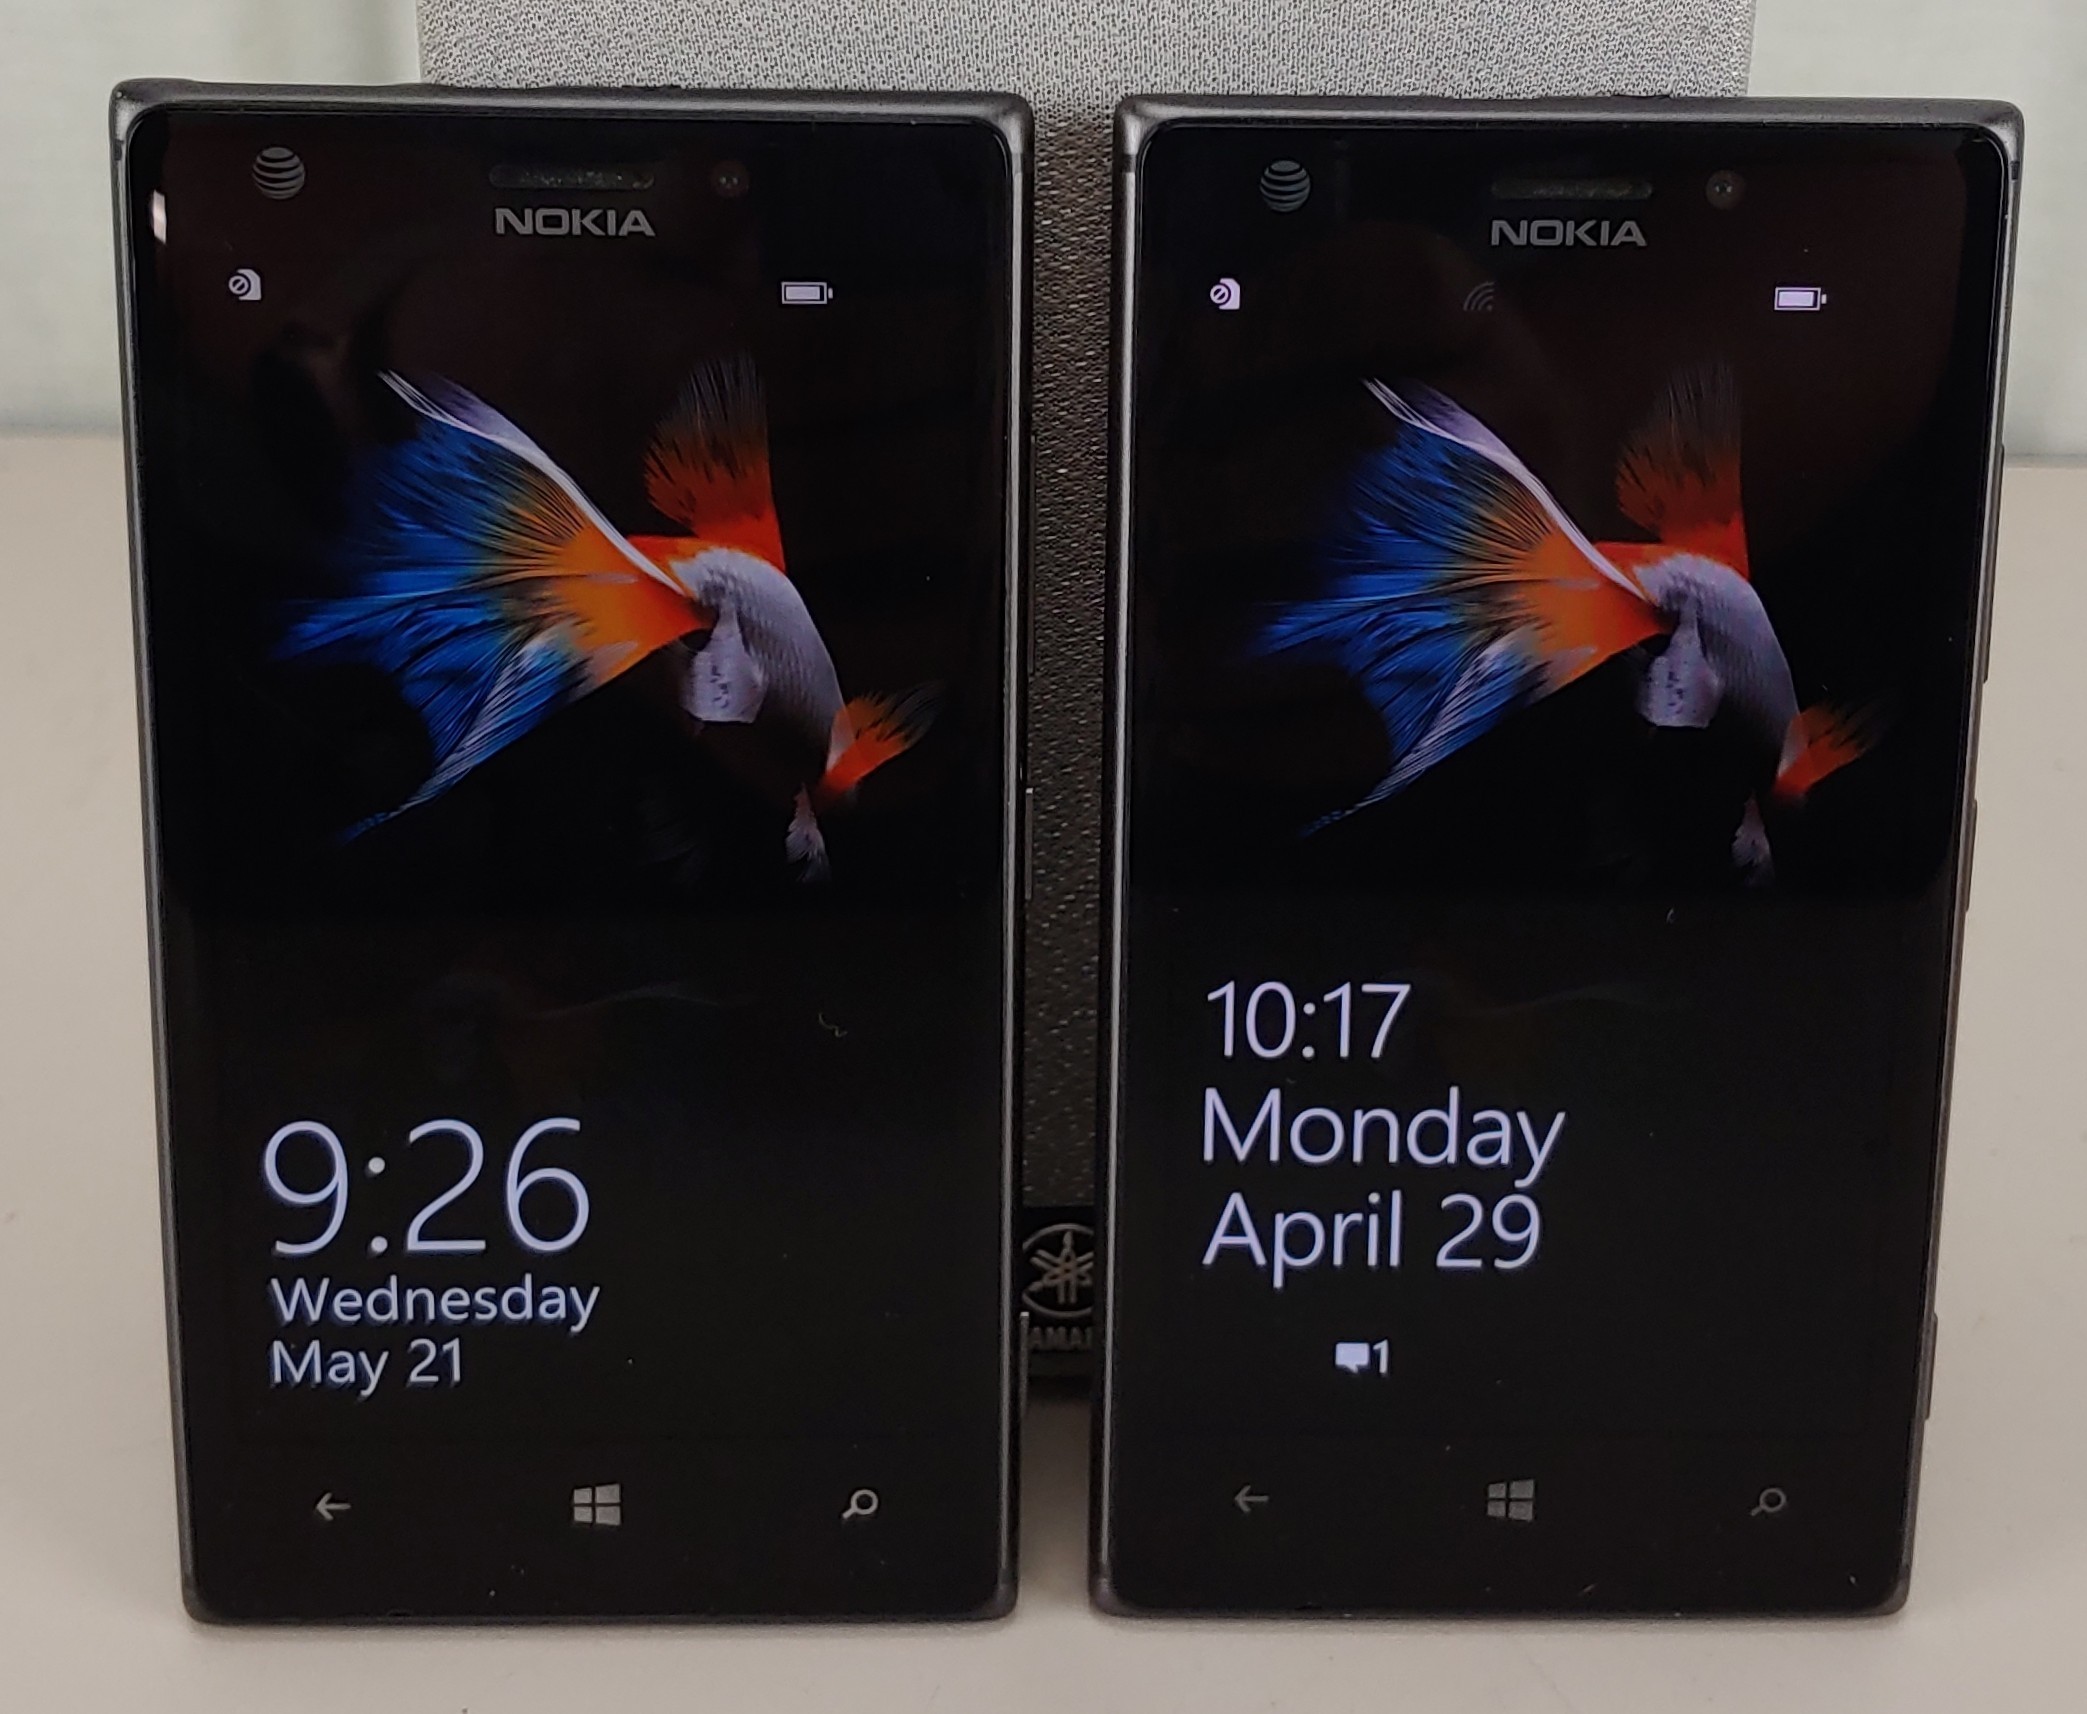 Lot of 2 Nokia Lumia 925 16GB (AT&T) Windows Phone